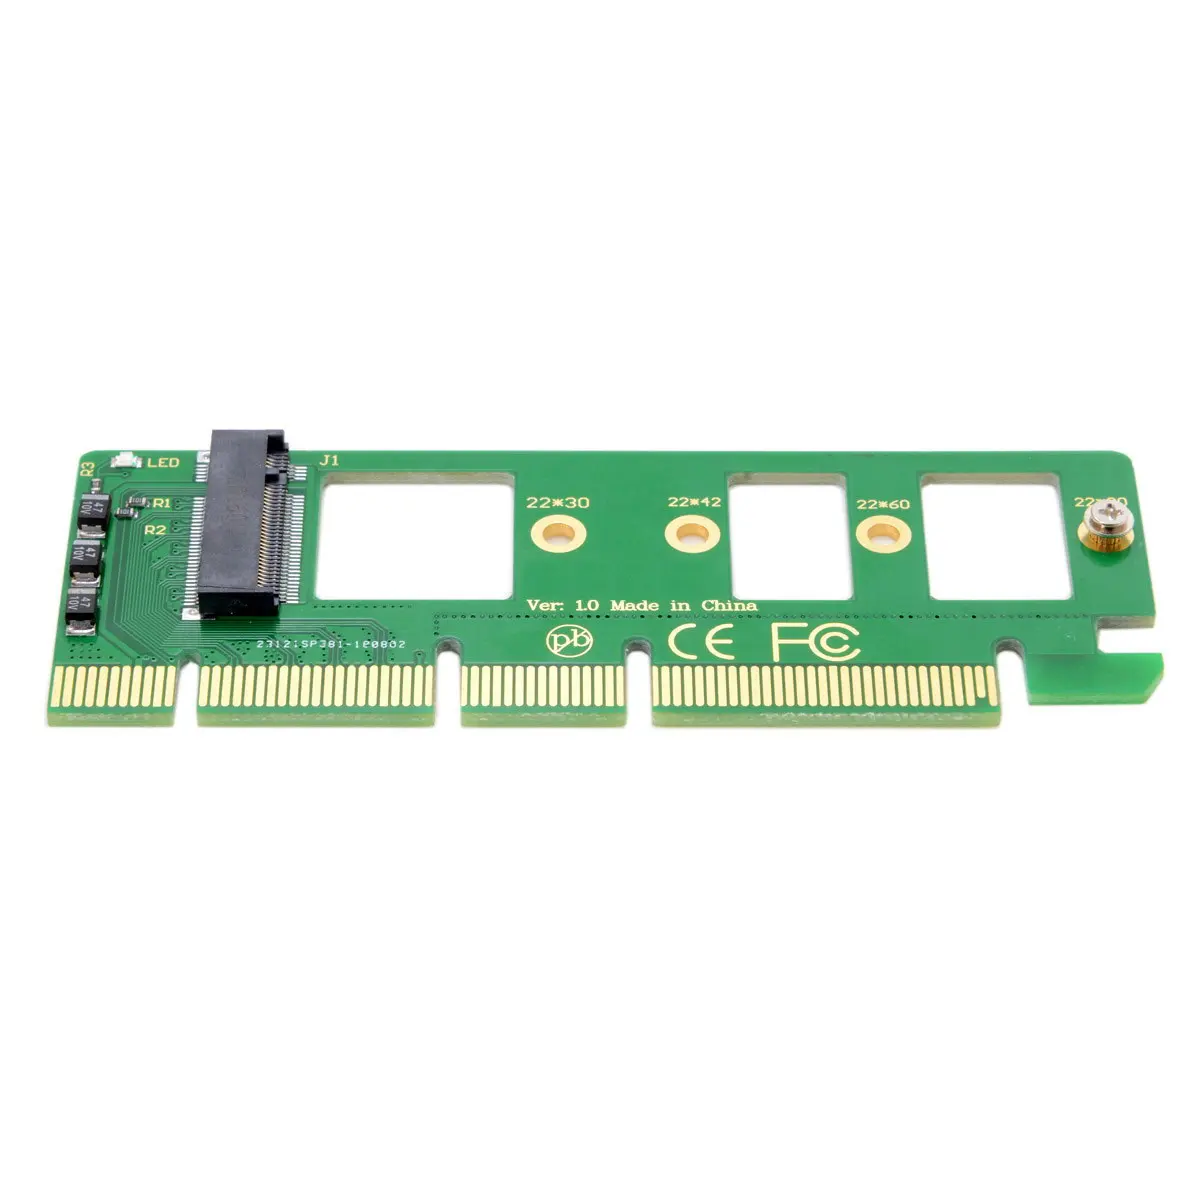 

PCI-E 3.0 16x x4 Adapter NGFF M-key NVME AHCI SSD Adapter for XP941 SM951 PM951 A110 m6e 960 EVO SSD